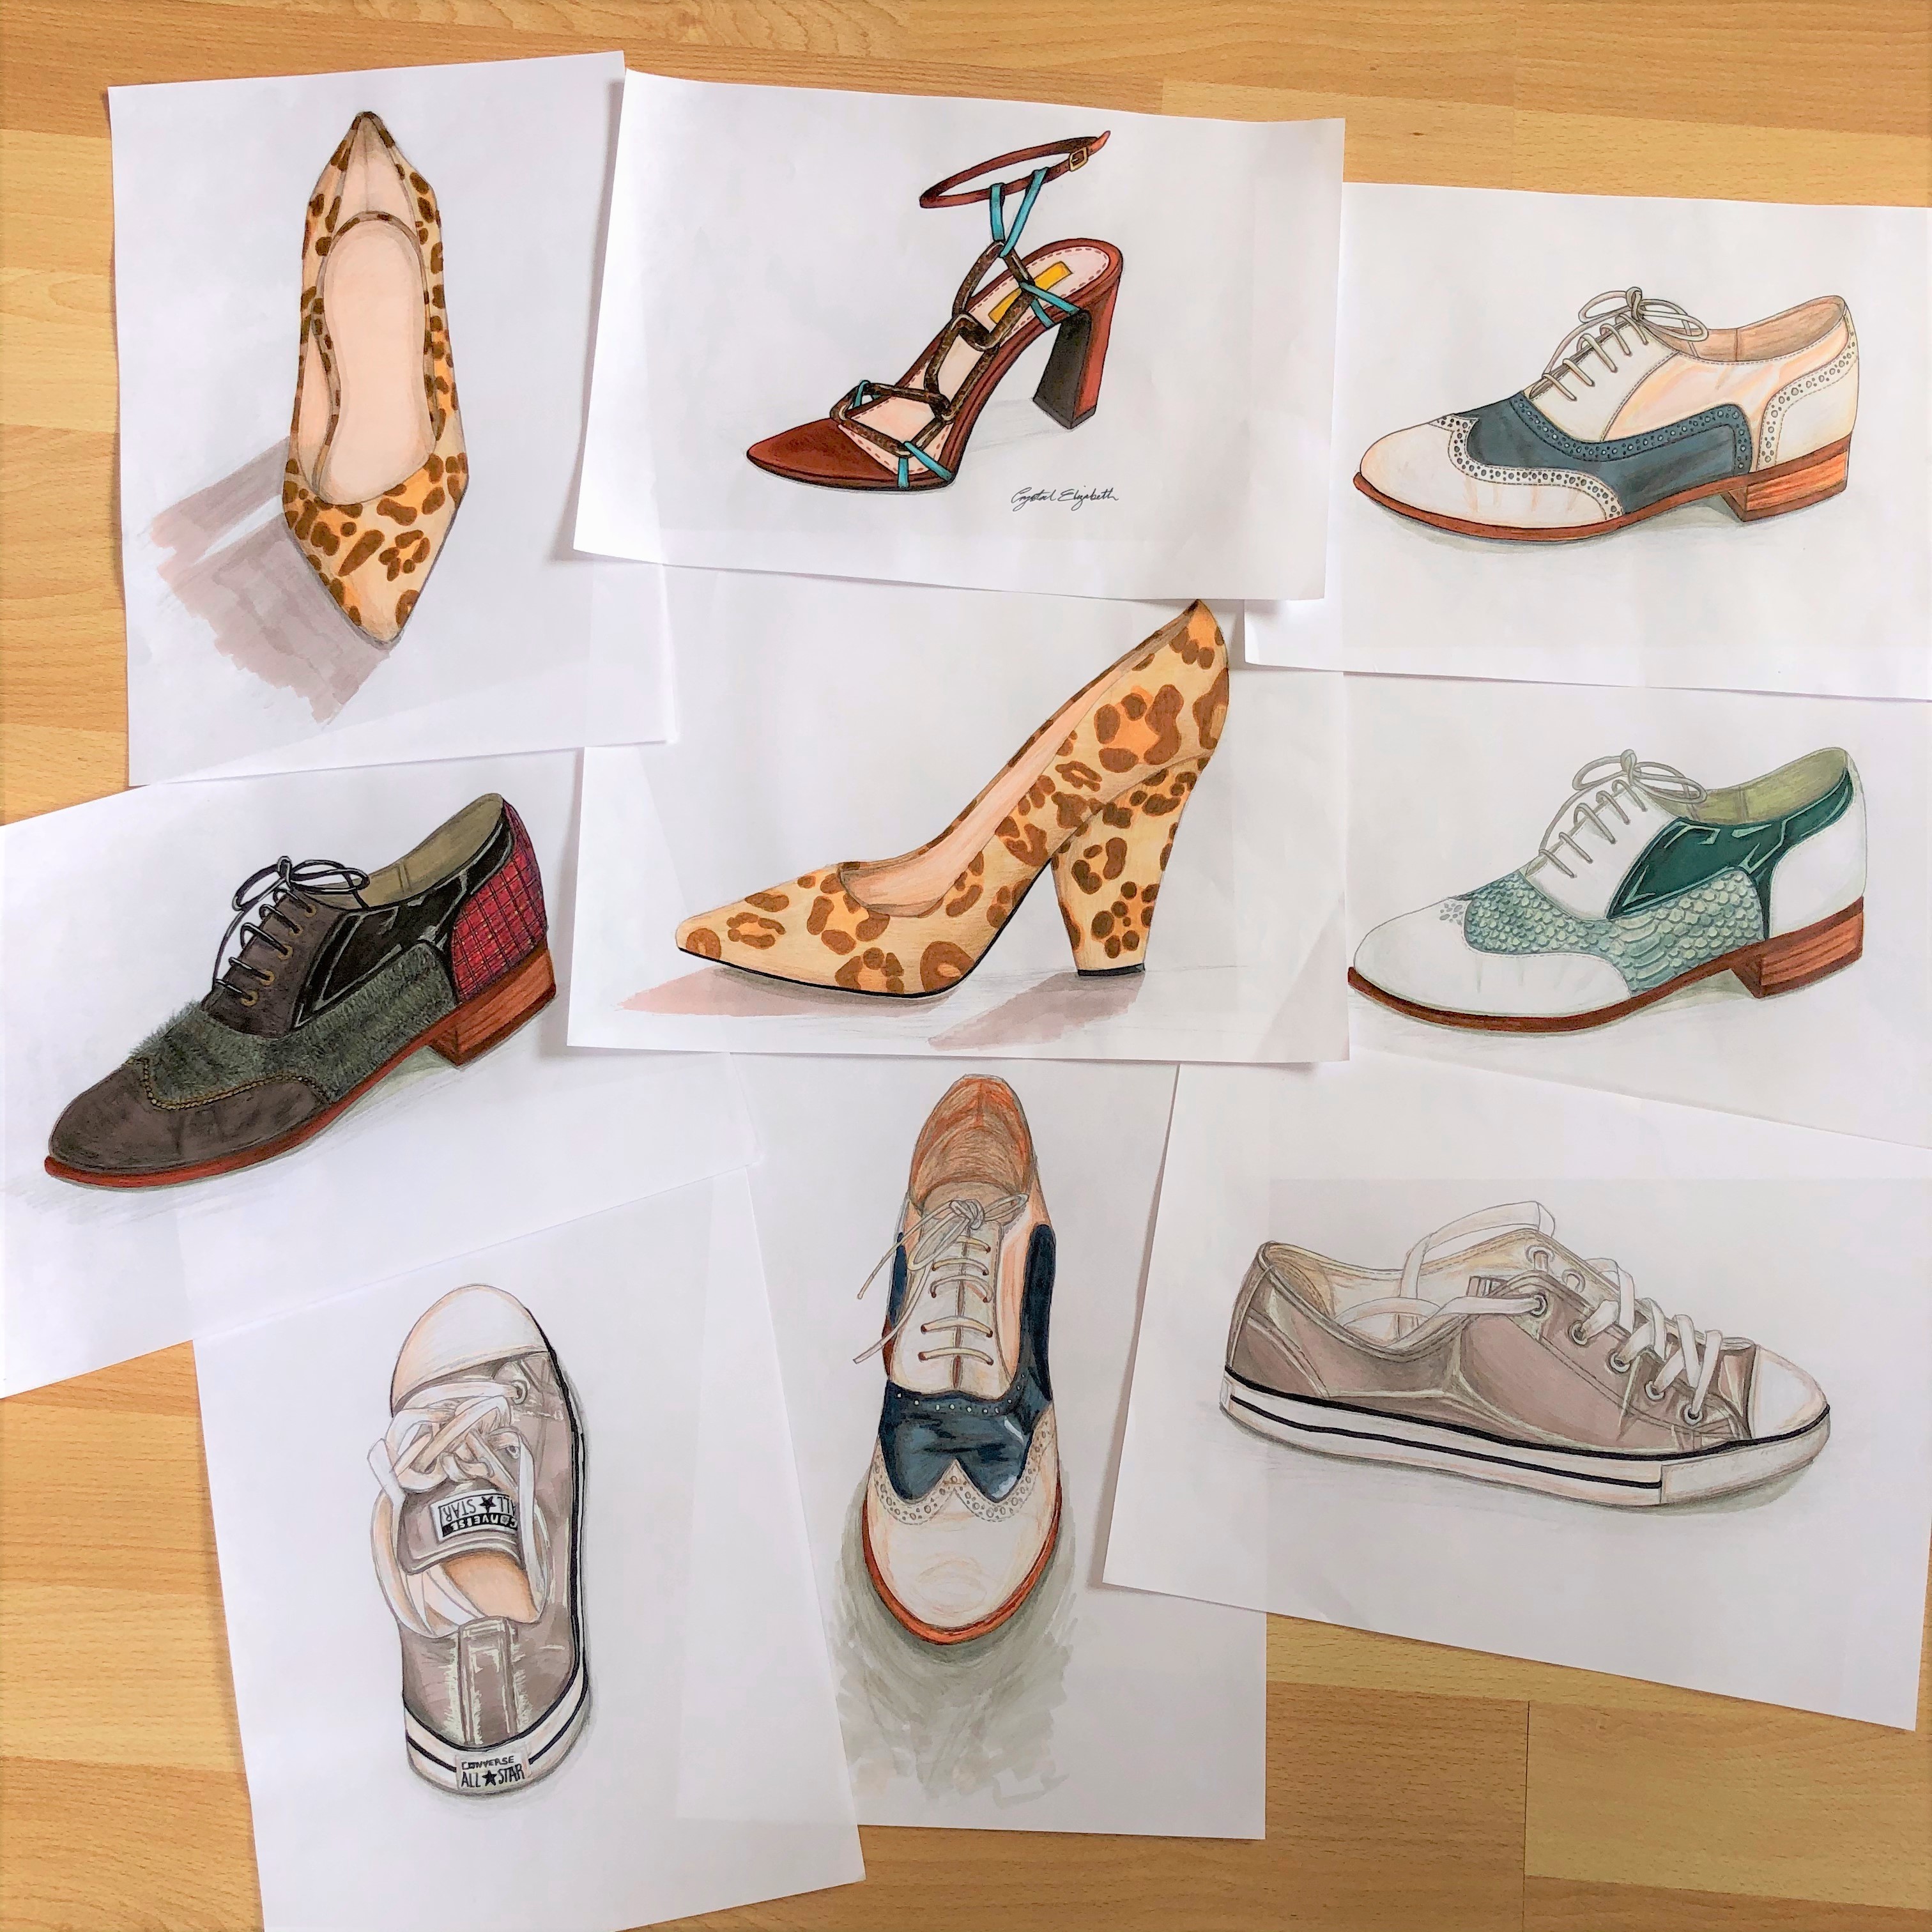 Crystal's work: Footwear illustrations